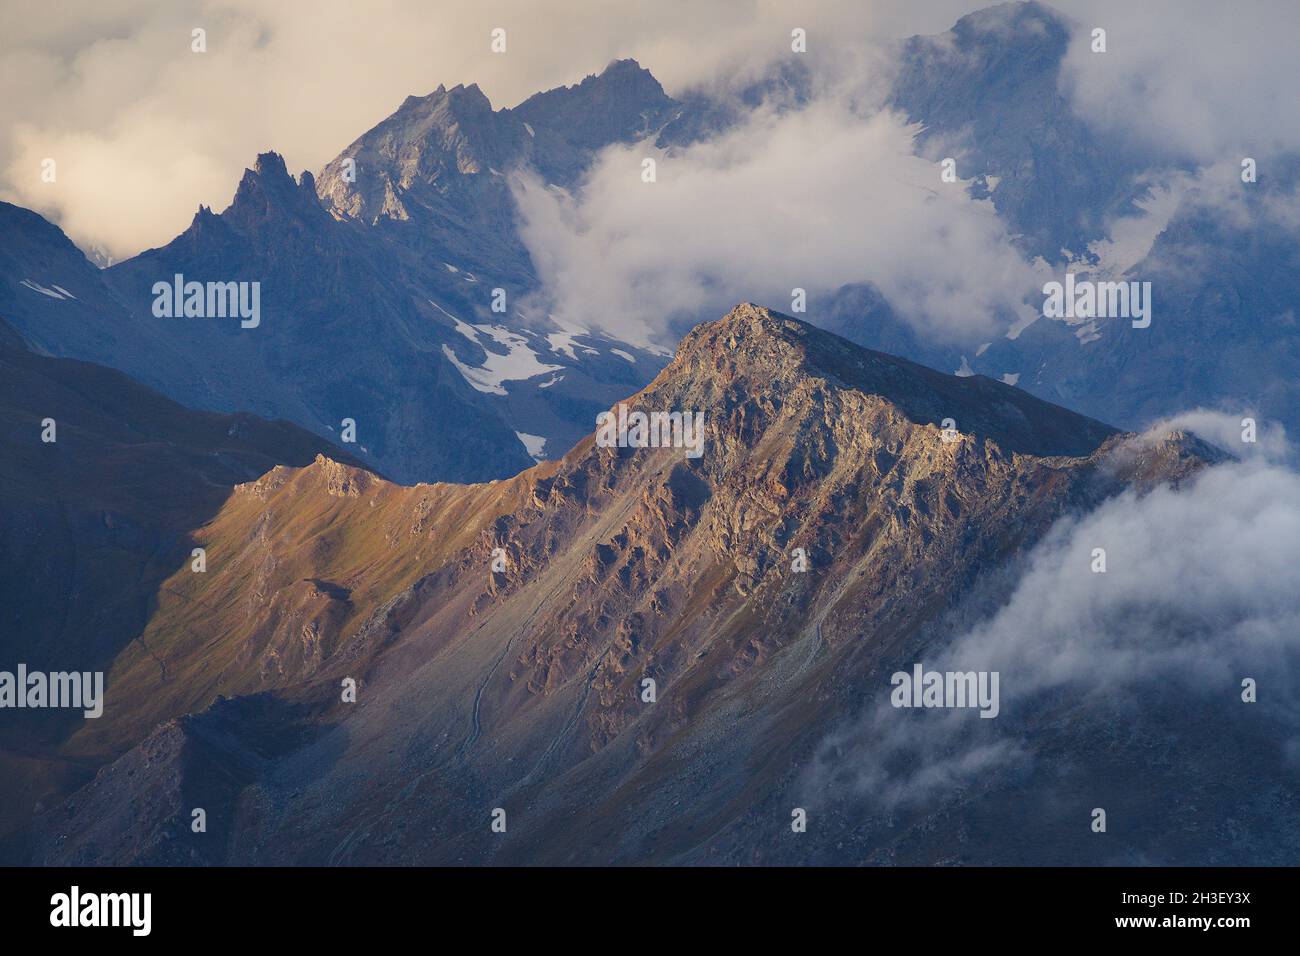 Gignod, Aosta Valley (Italy): Stau effect on Crou de Bleintse's  slopes. Stock Photo